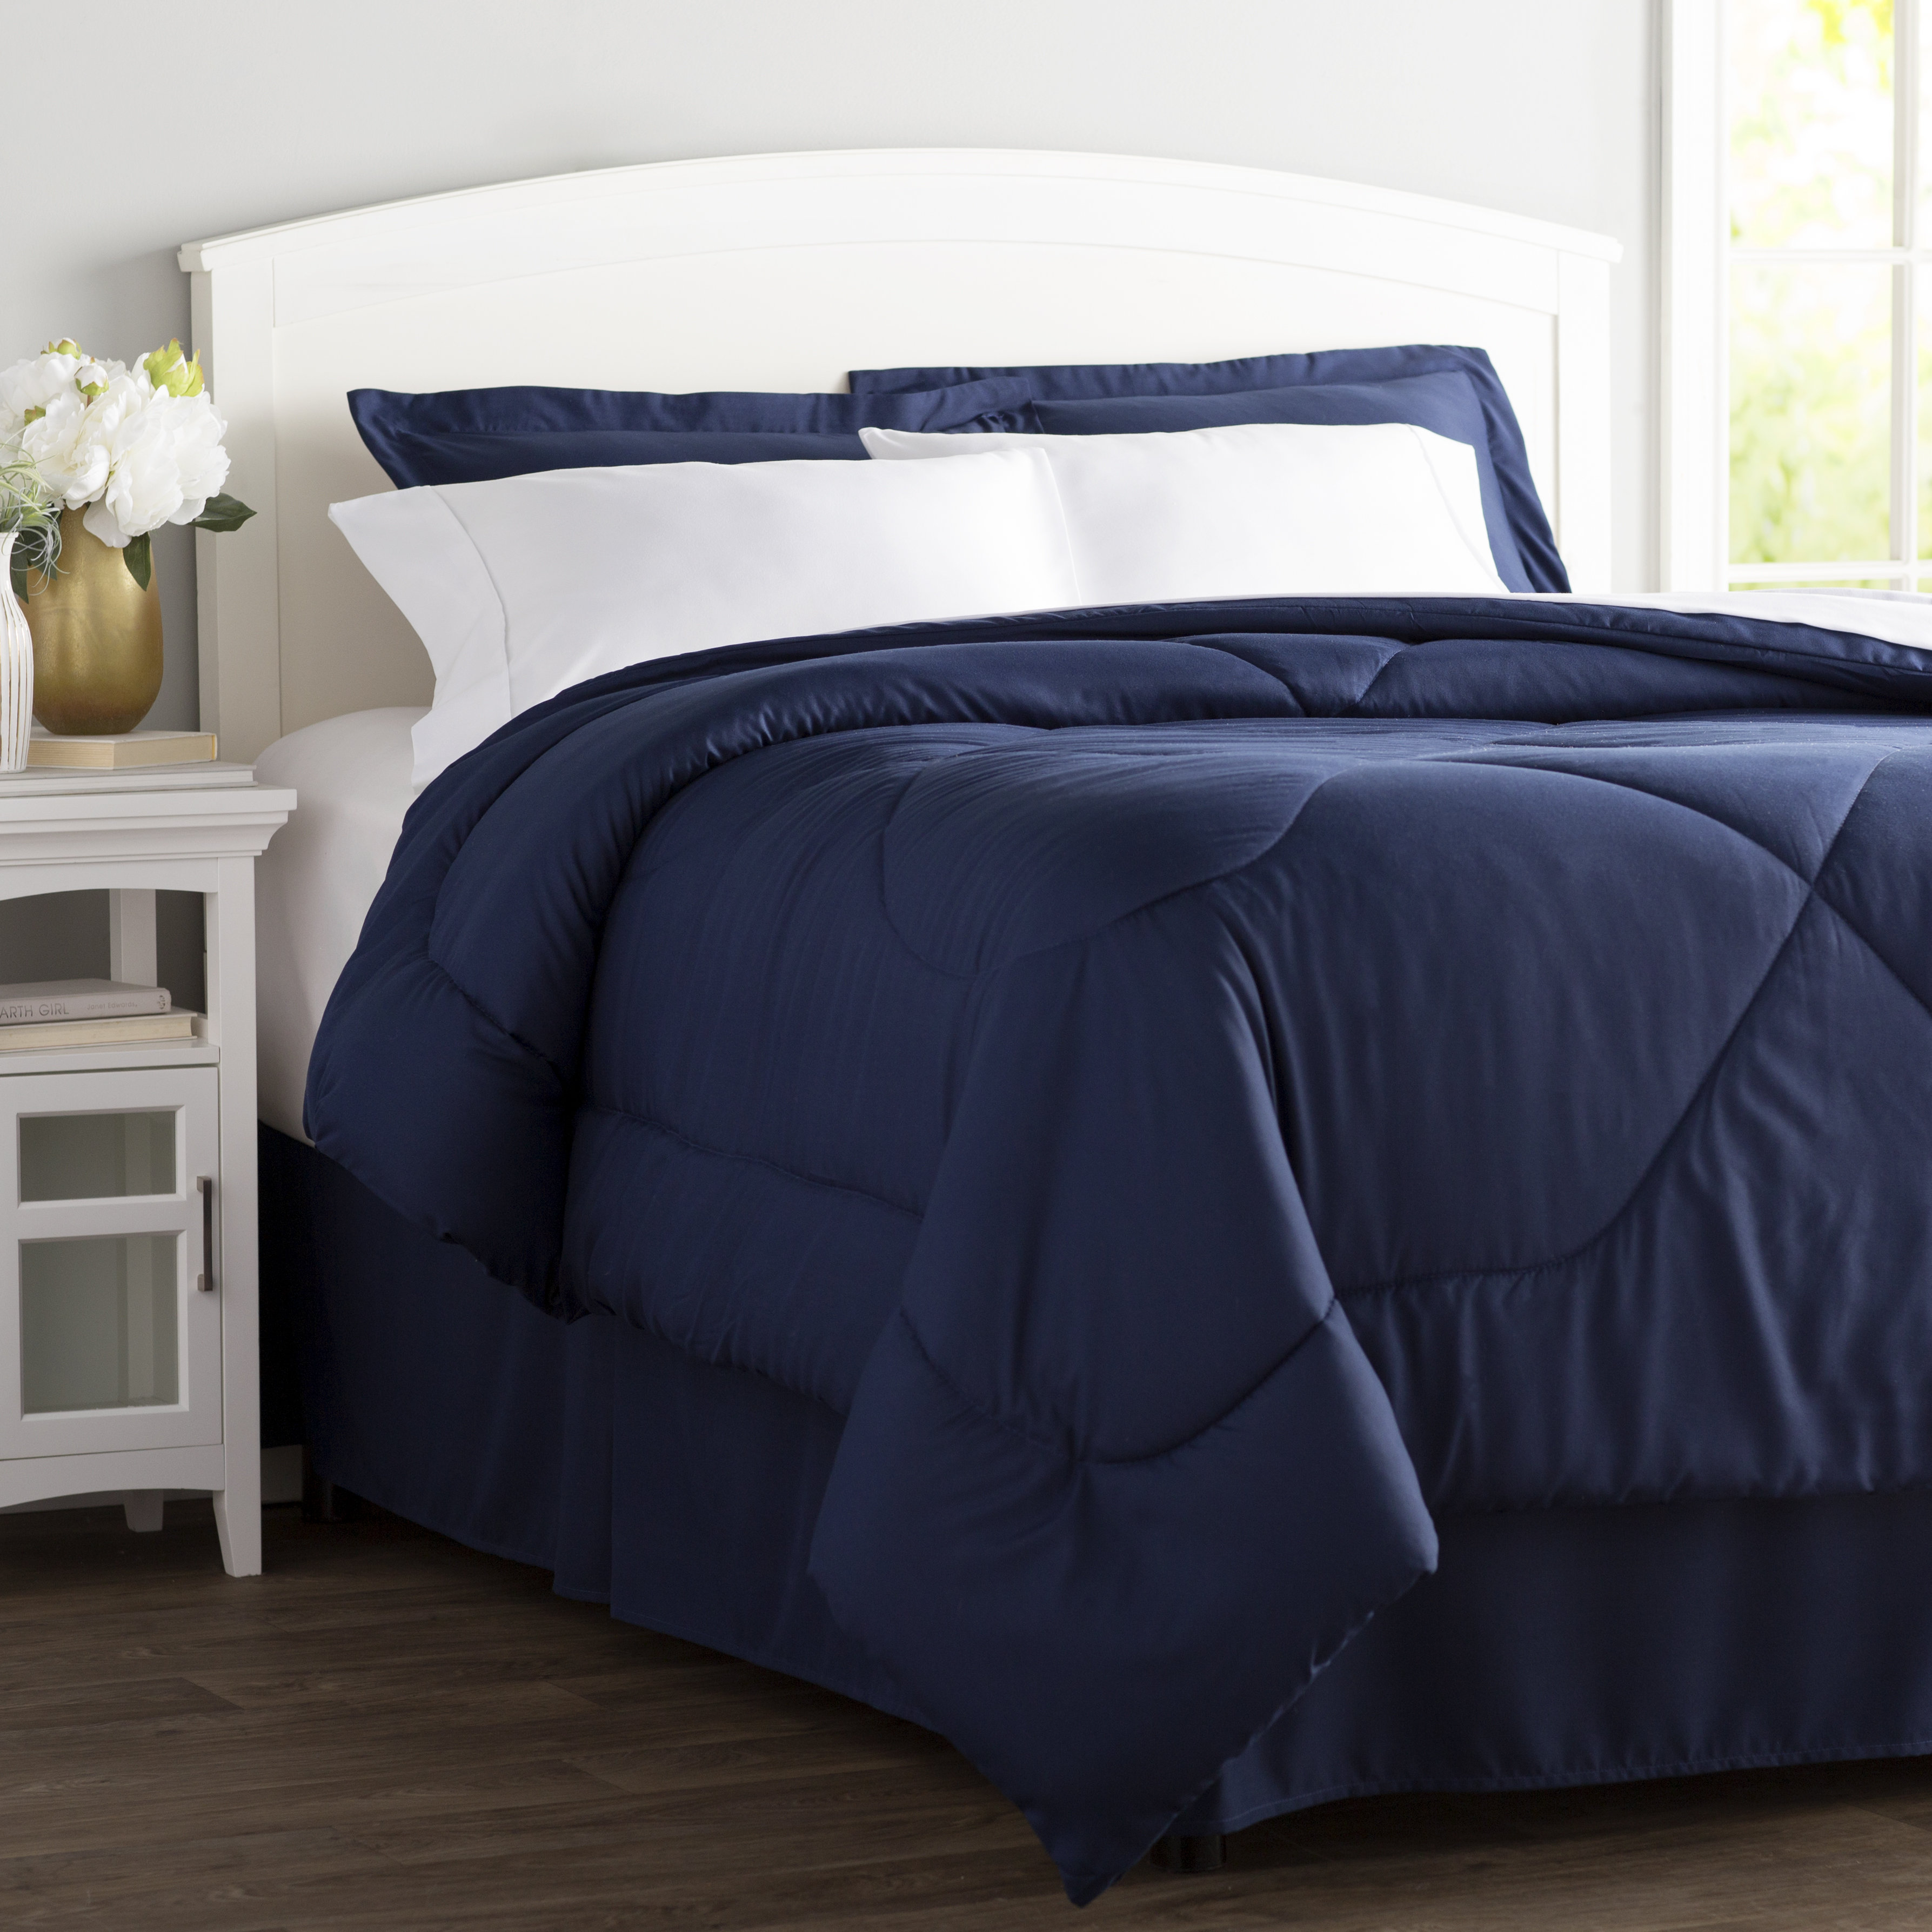 Spirit 8 Piece Bed In A Bag Comforter Set Reviews Wayfair